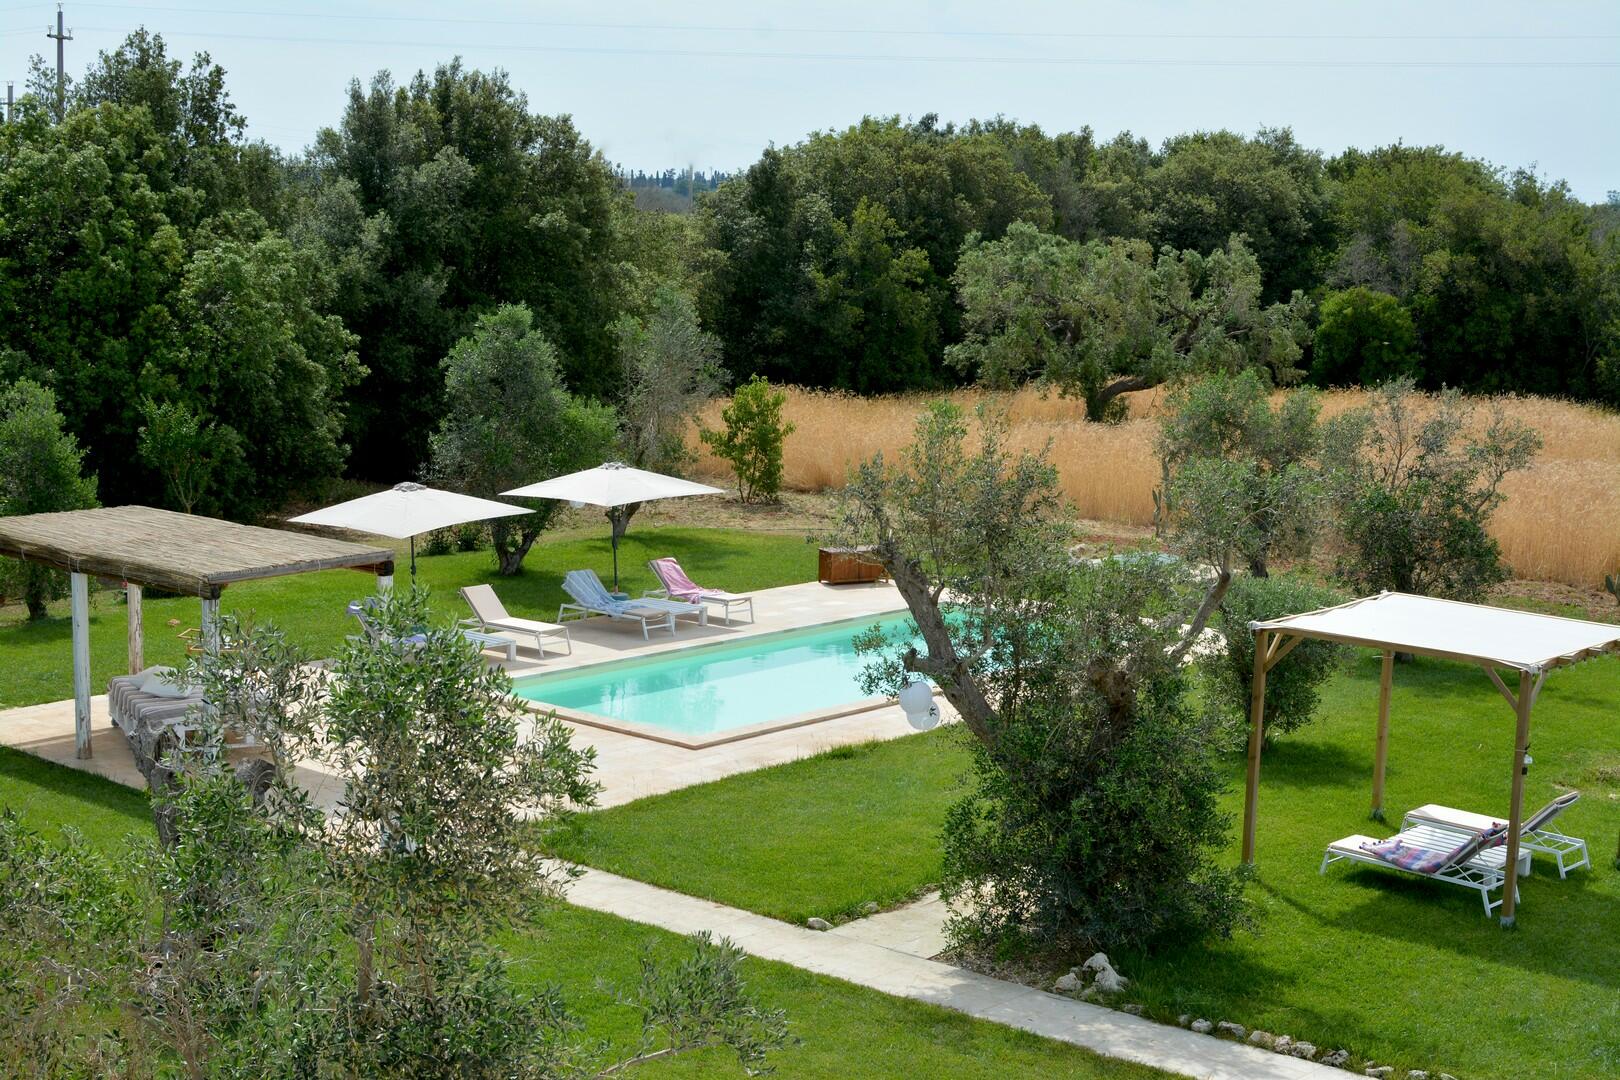 Villa farnara Swimming pool area 